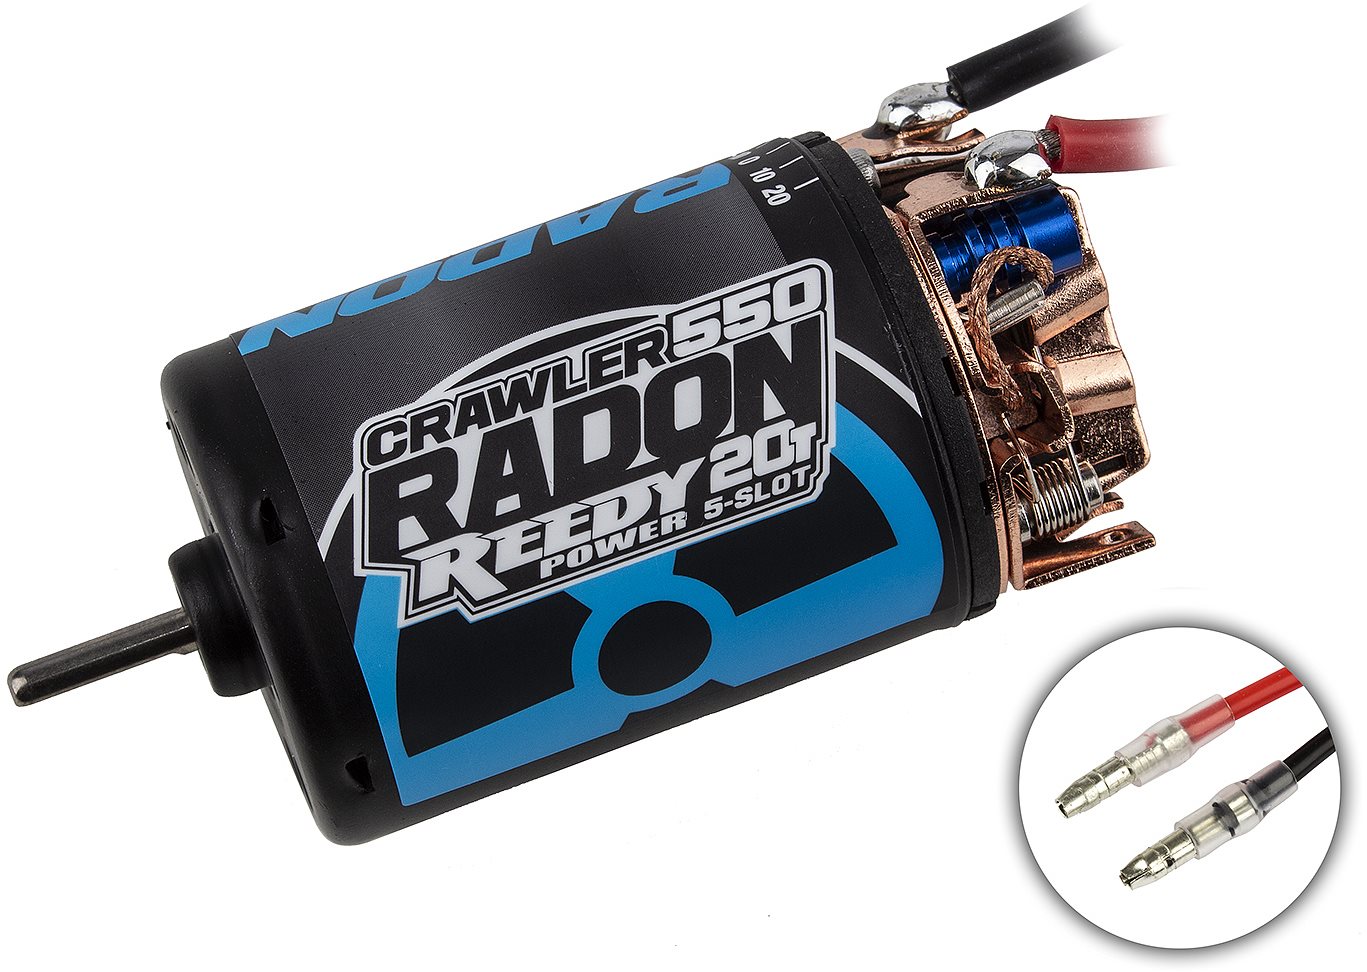 Associated Reedy Radon 2 Crawler 550 20T 5-Slot 1100V Brushed Motor